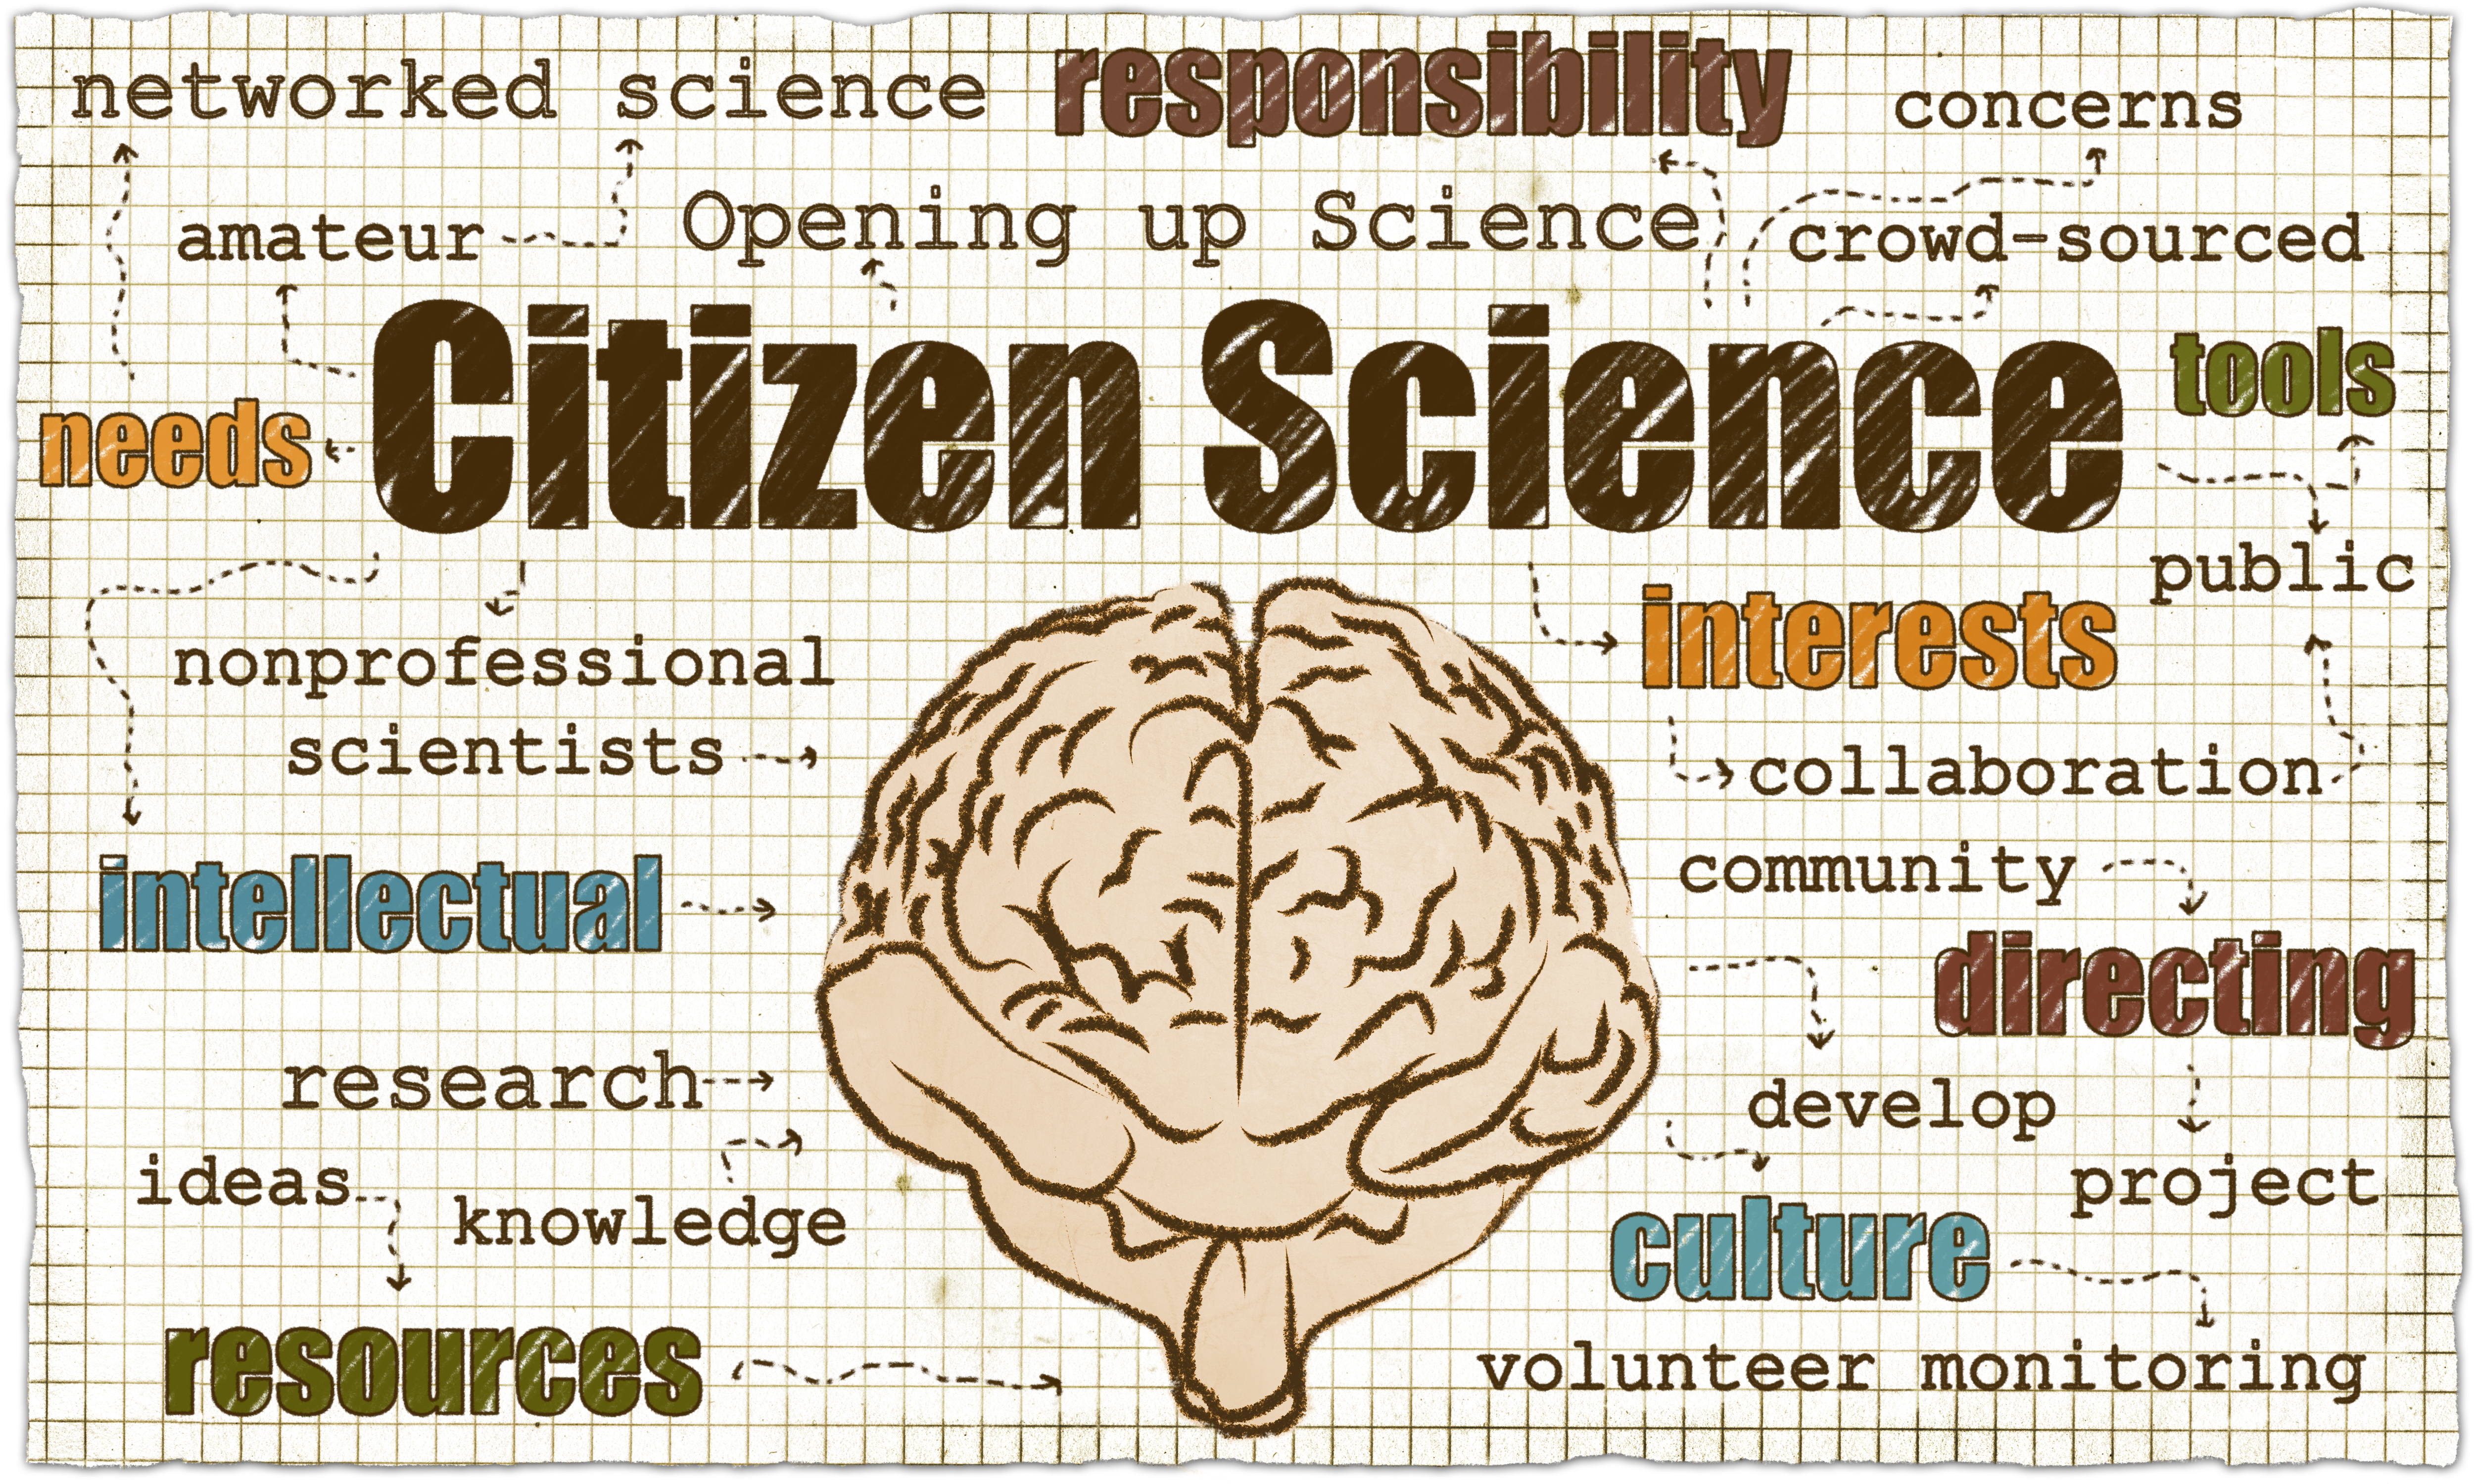 citizen science